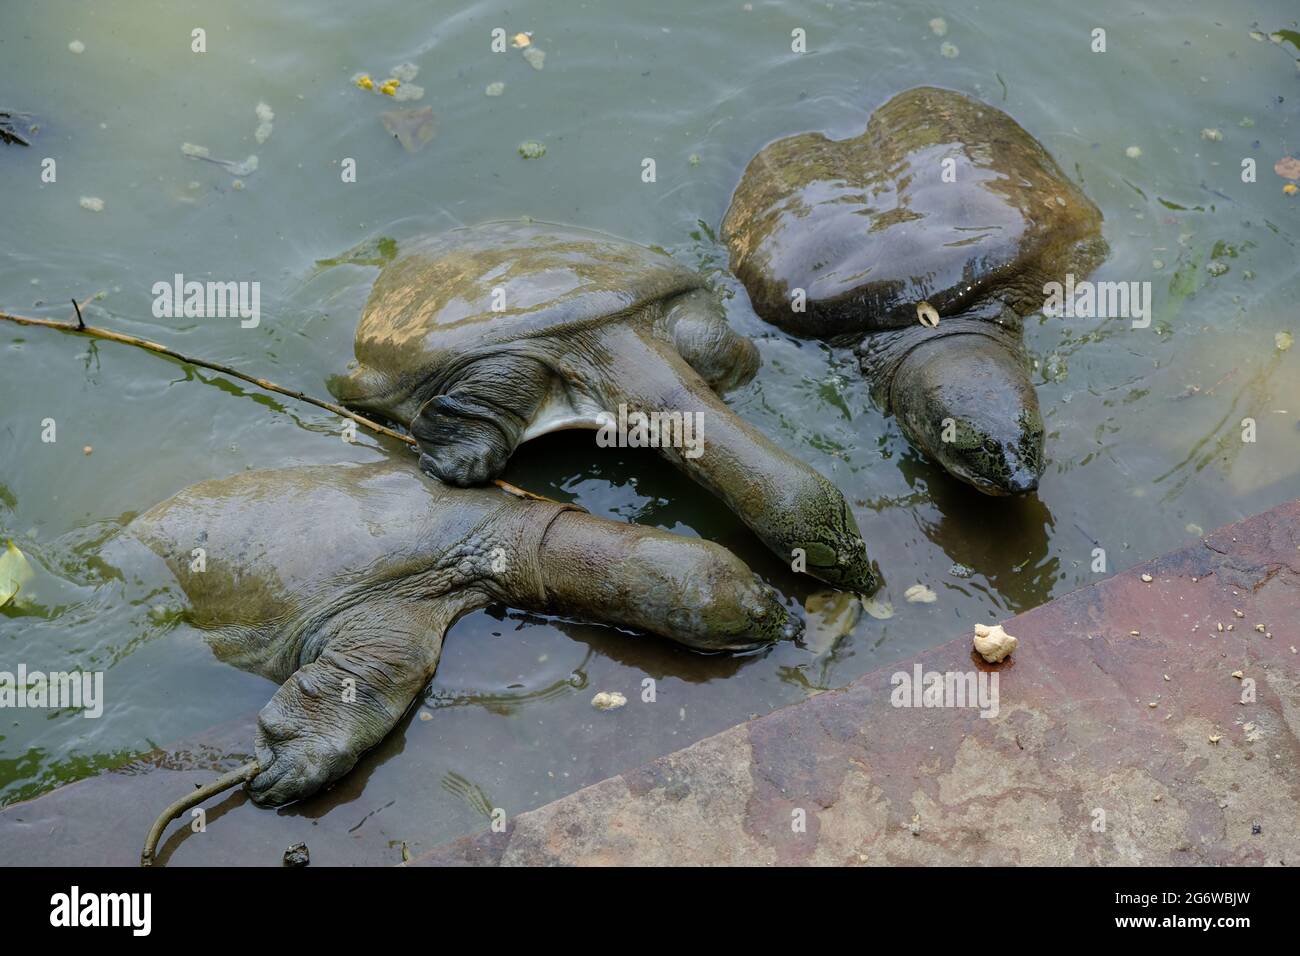 India Agra - Chelydra serpentina - comune snap tartaruga fiume Yamuna Foto Stock